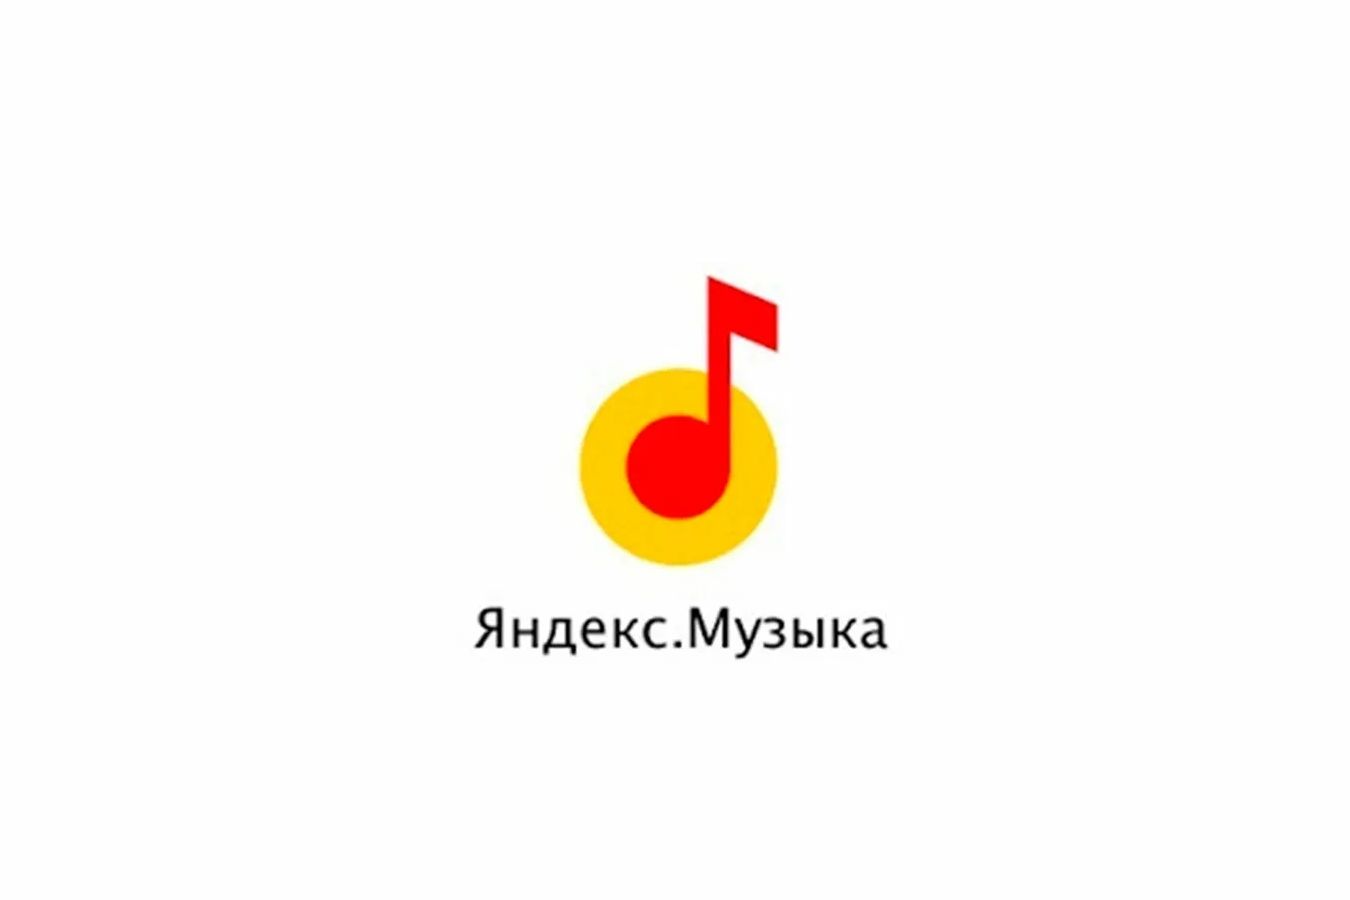 Яндекс музыка телеграмм скачать фото 32